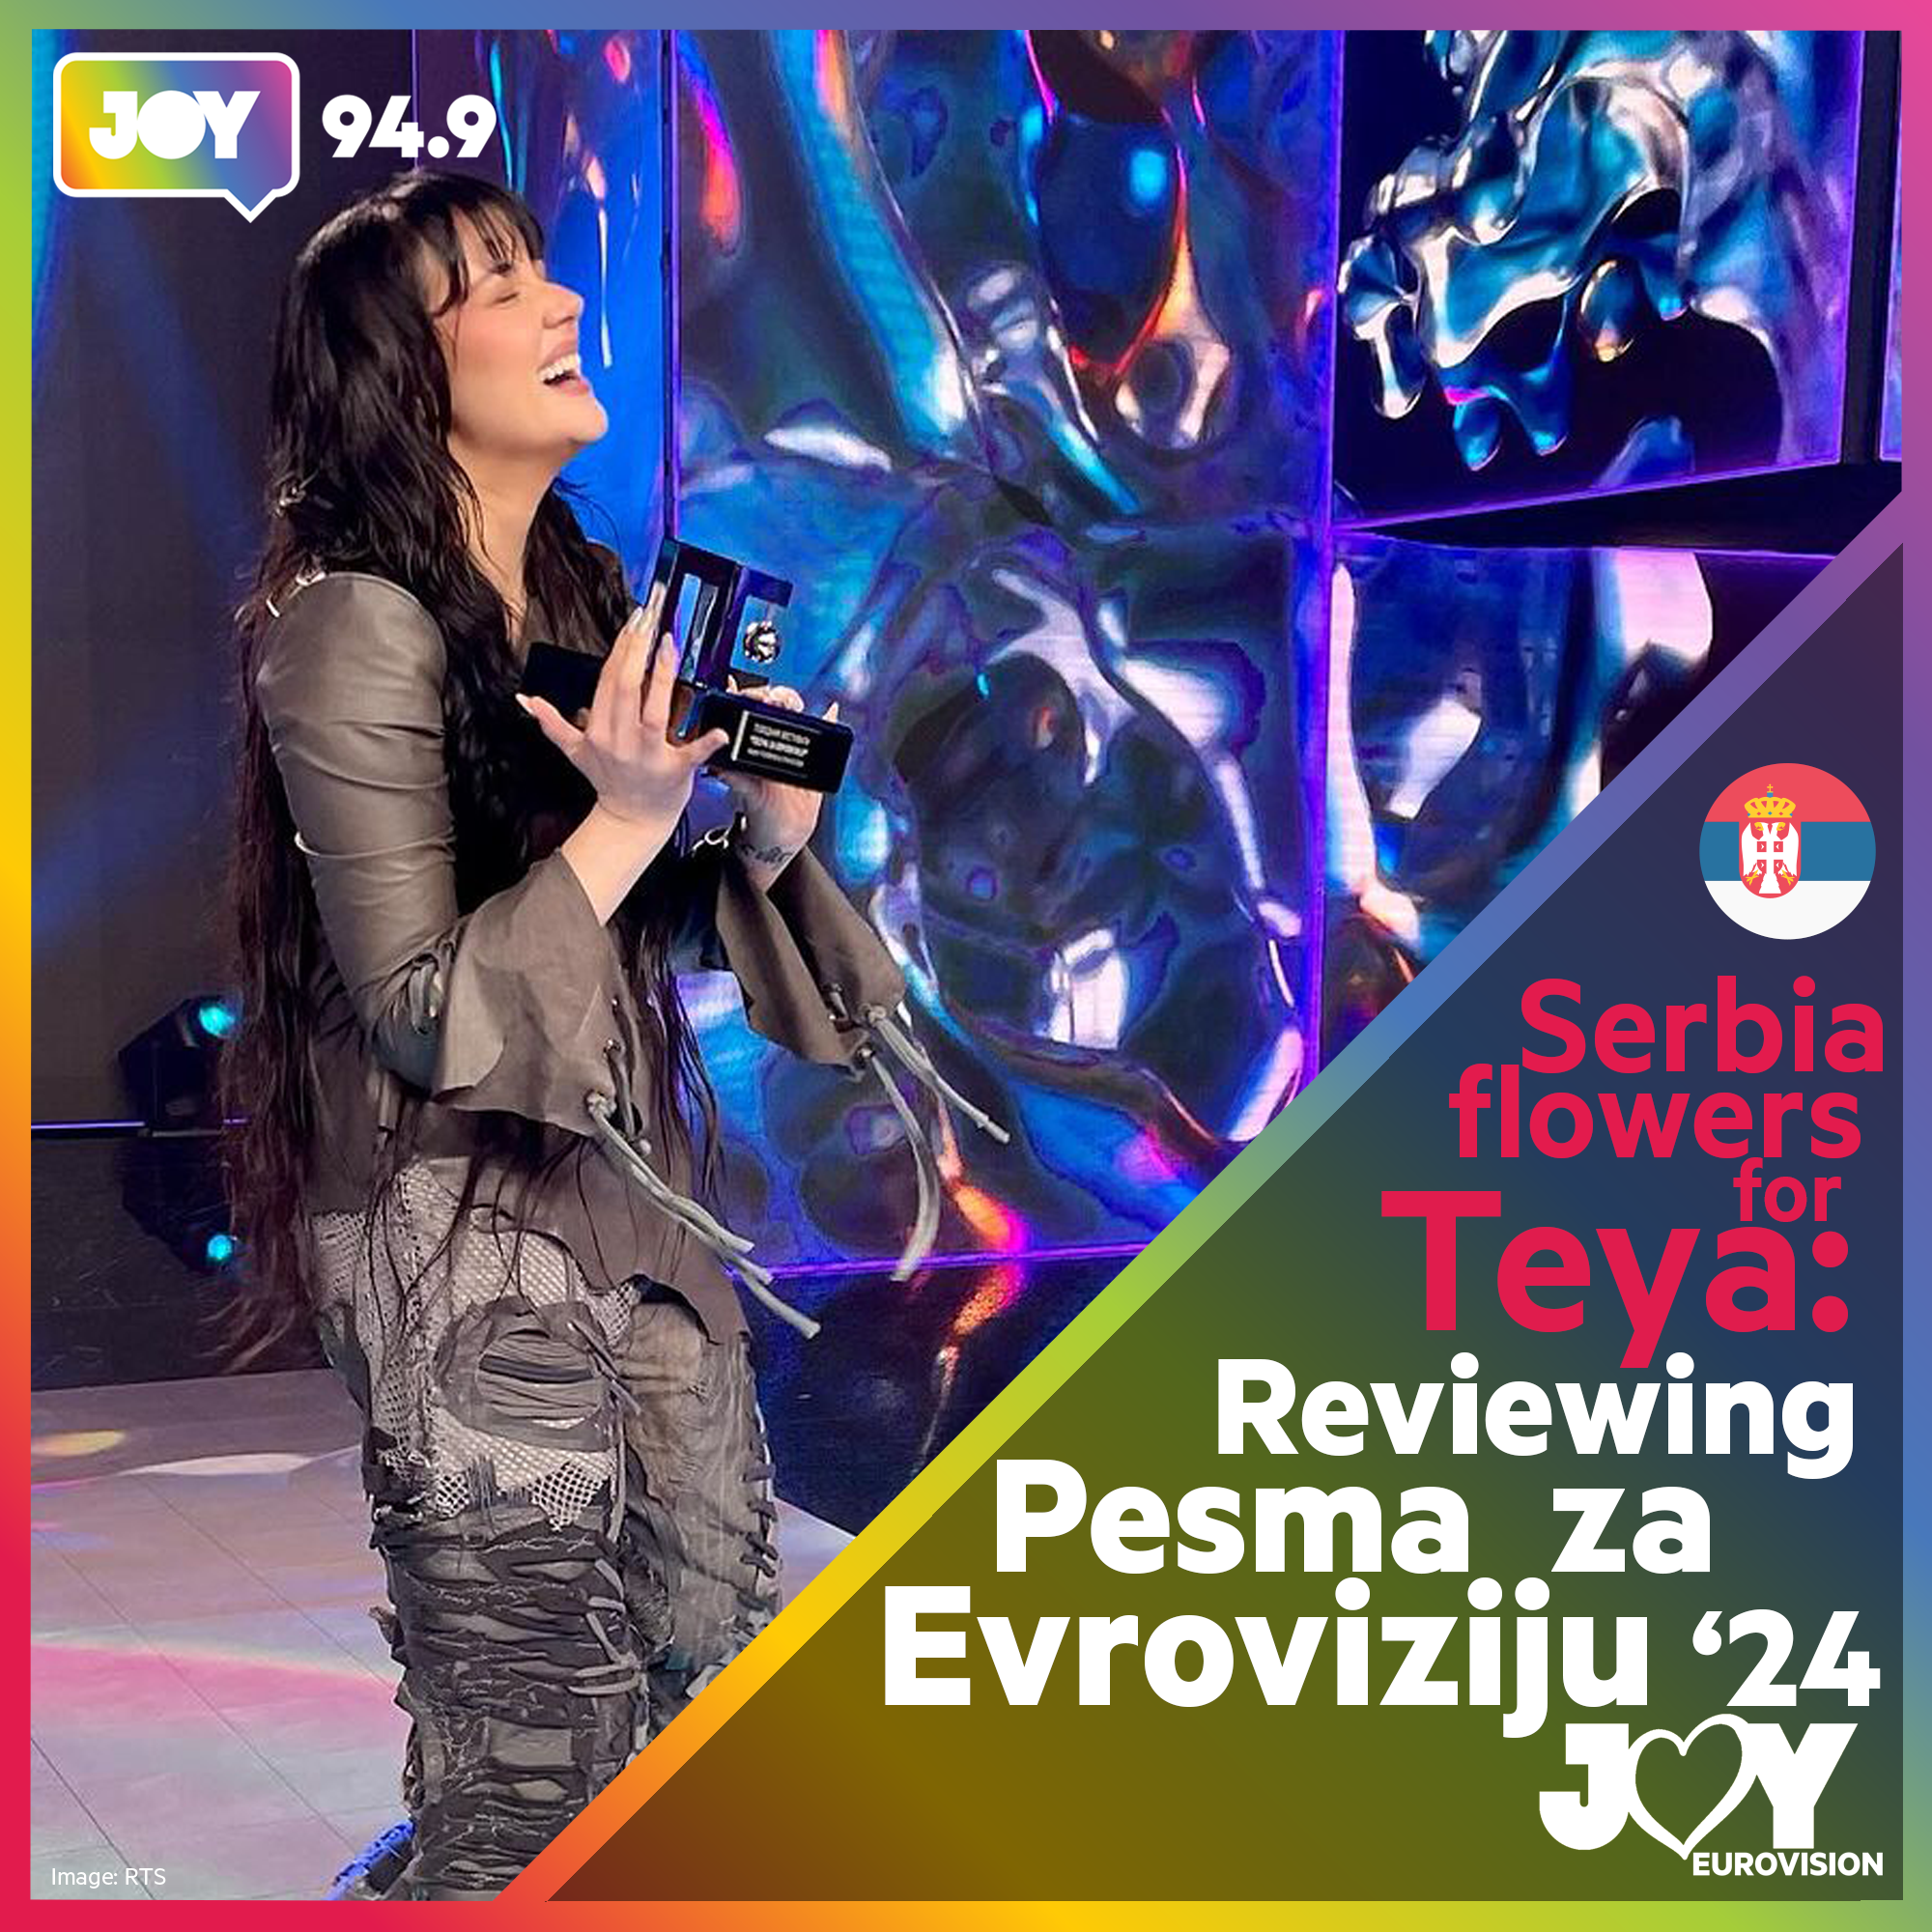 🇷🇸 Serbia flowers for Teya: Reviewing Pesma za Evroviziju ’24